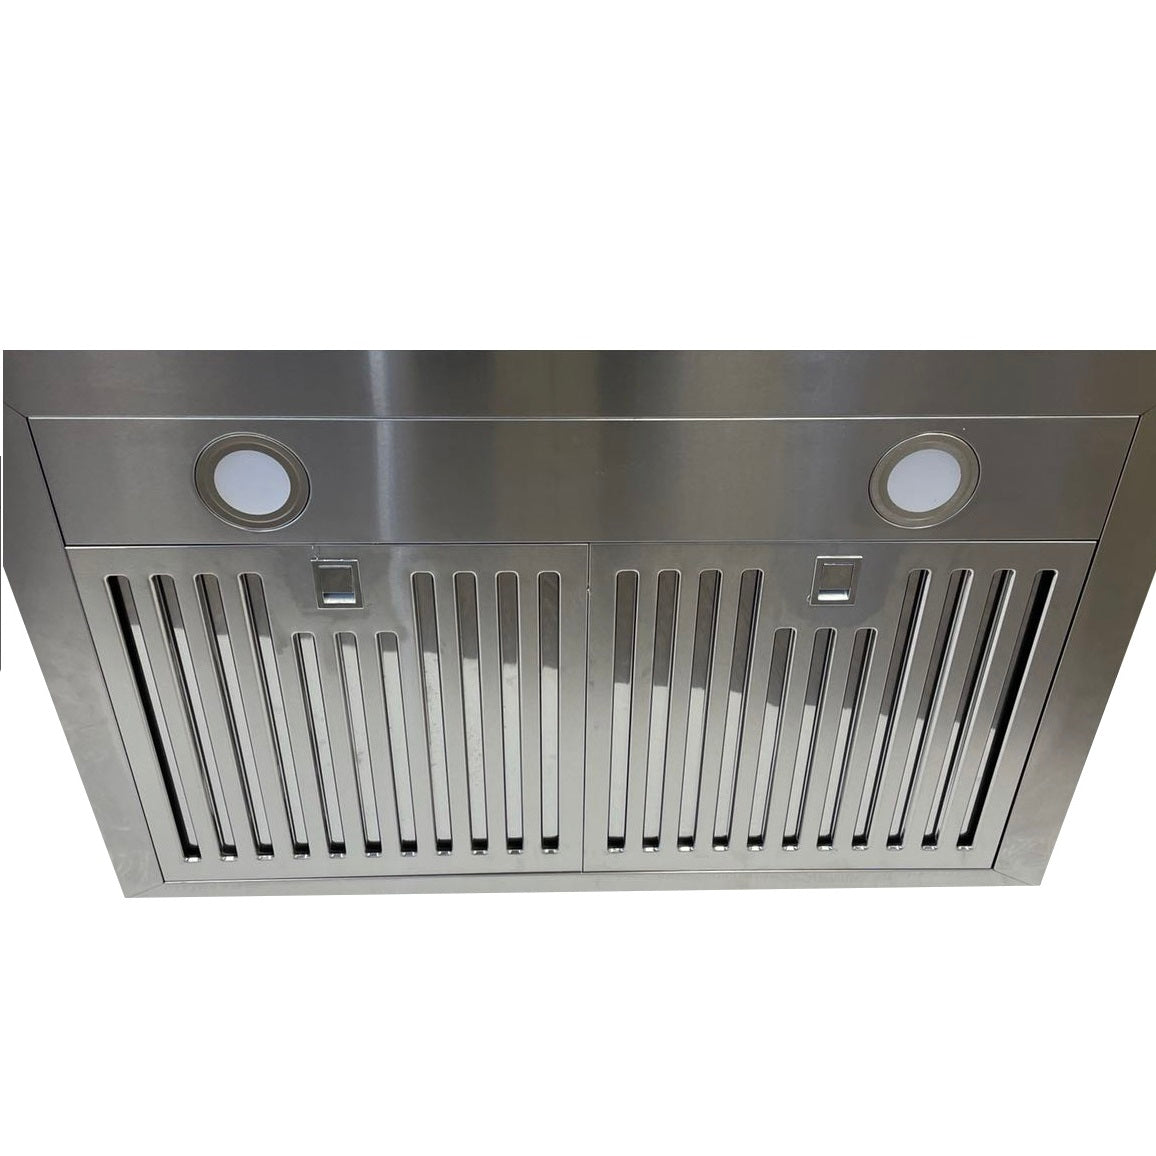 NOVEL Professional Wall cabinet Range Hood powerful 800 CFM stainless steel EURO-NWB01